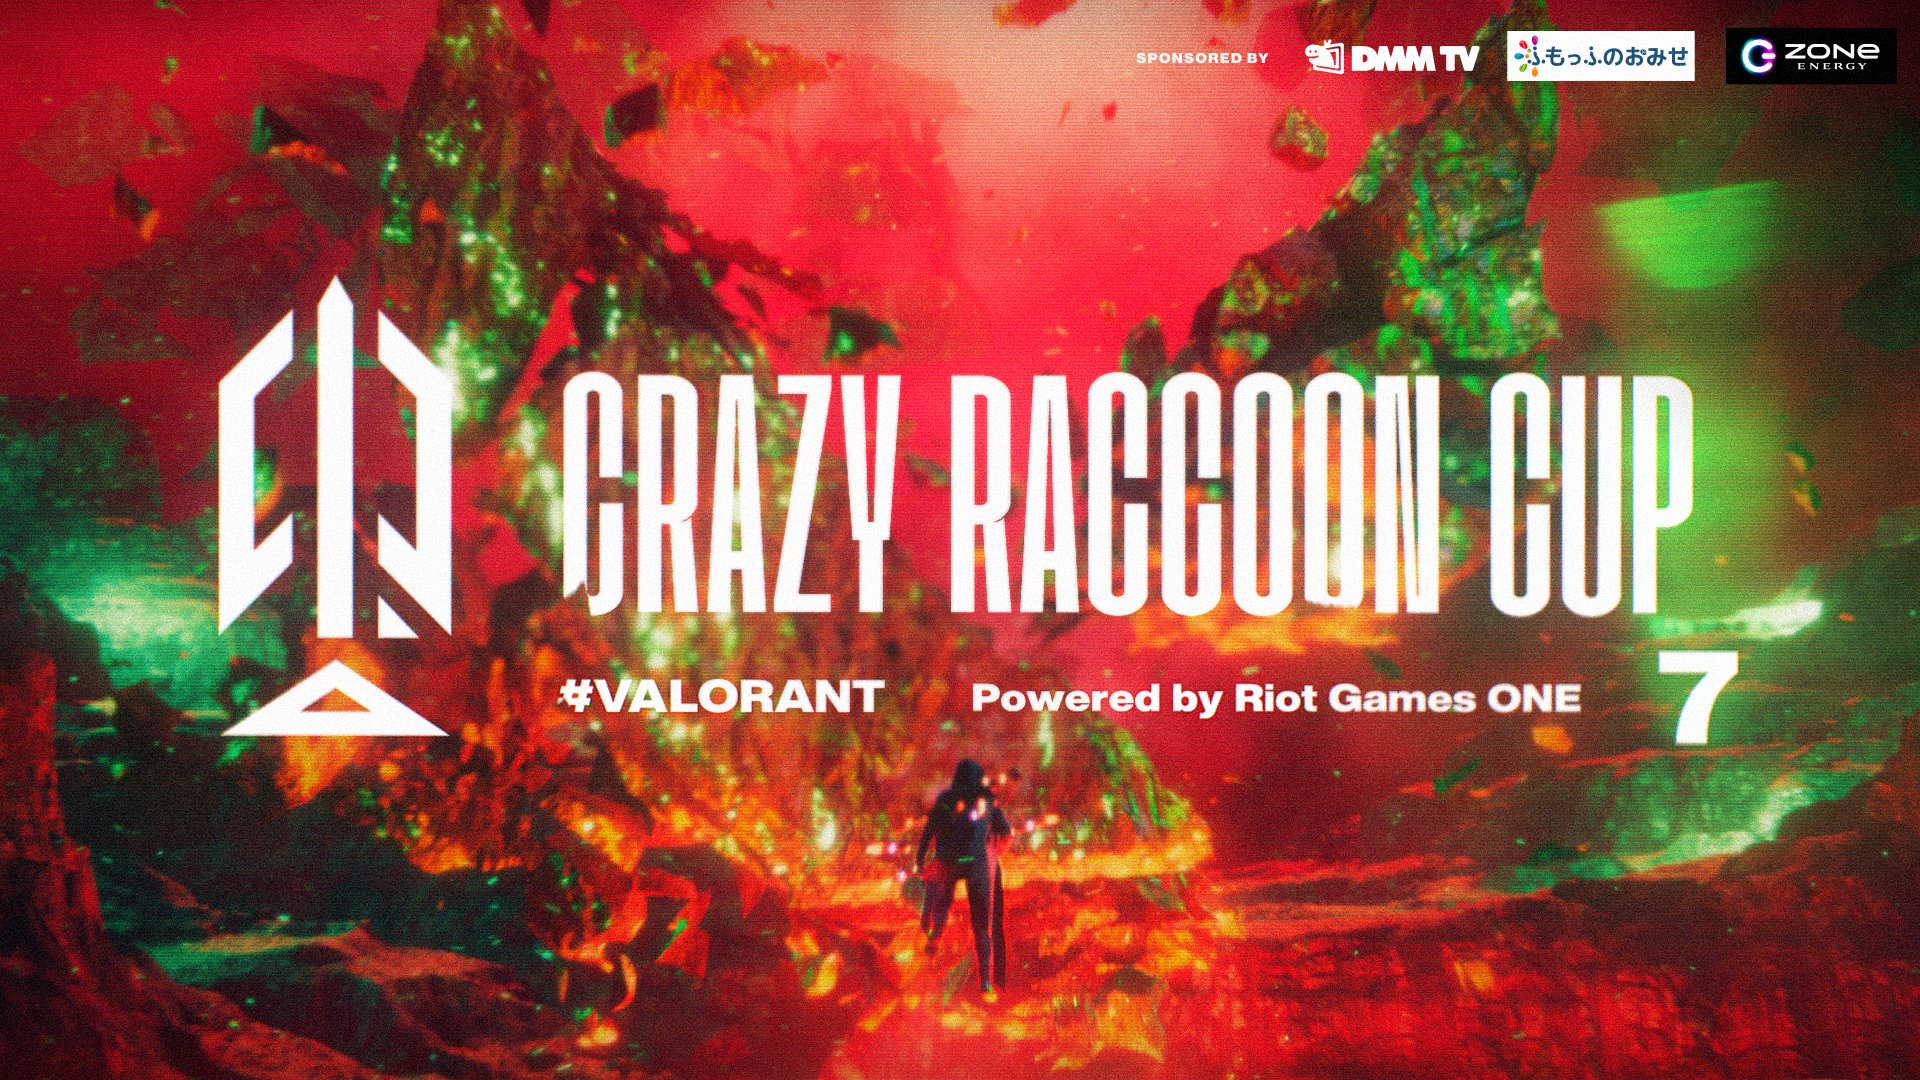 出演情報 – ta1yo, Clutch_Fi, TENNN, XQQが『第7回 Crazy Raccoon Cup Valorant Powered by Riot Games ONE』に出演